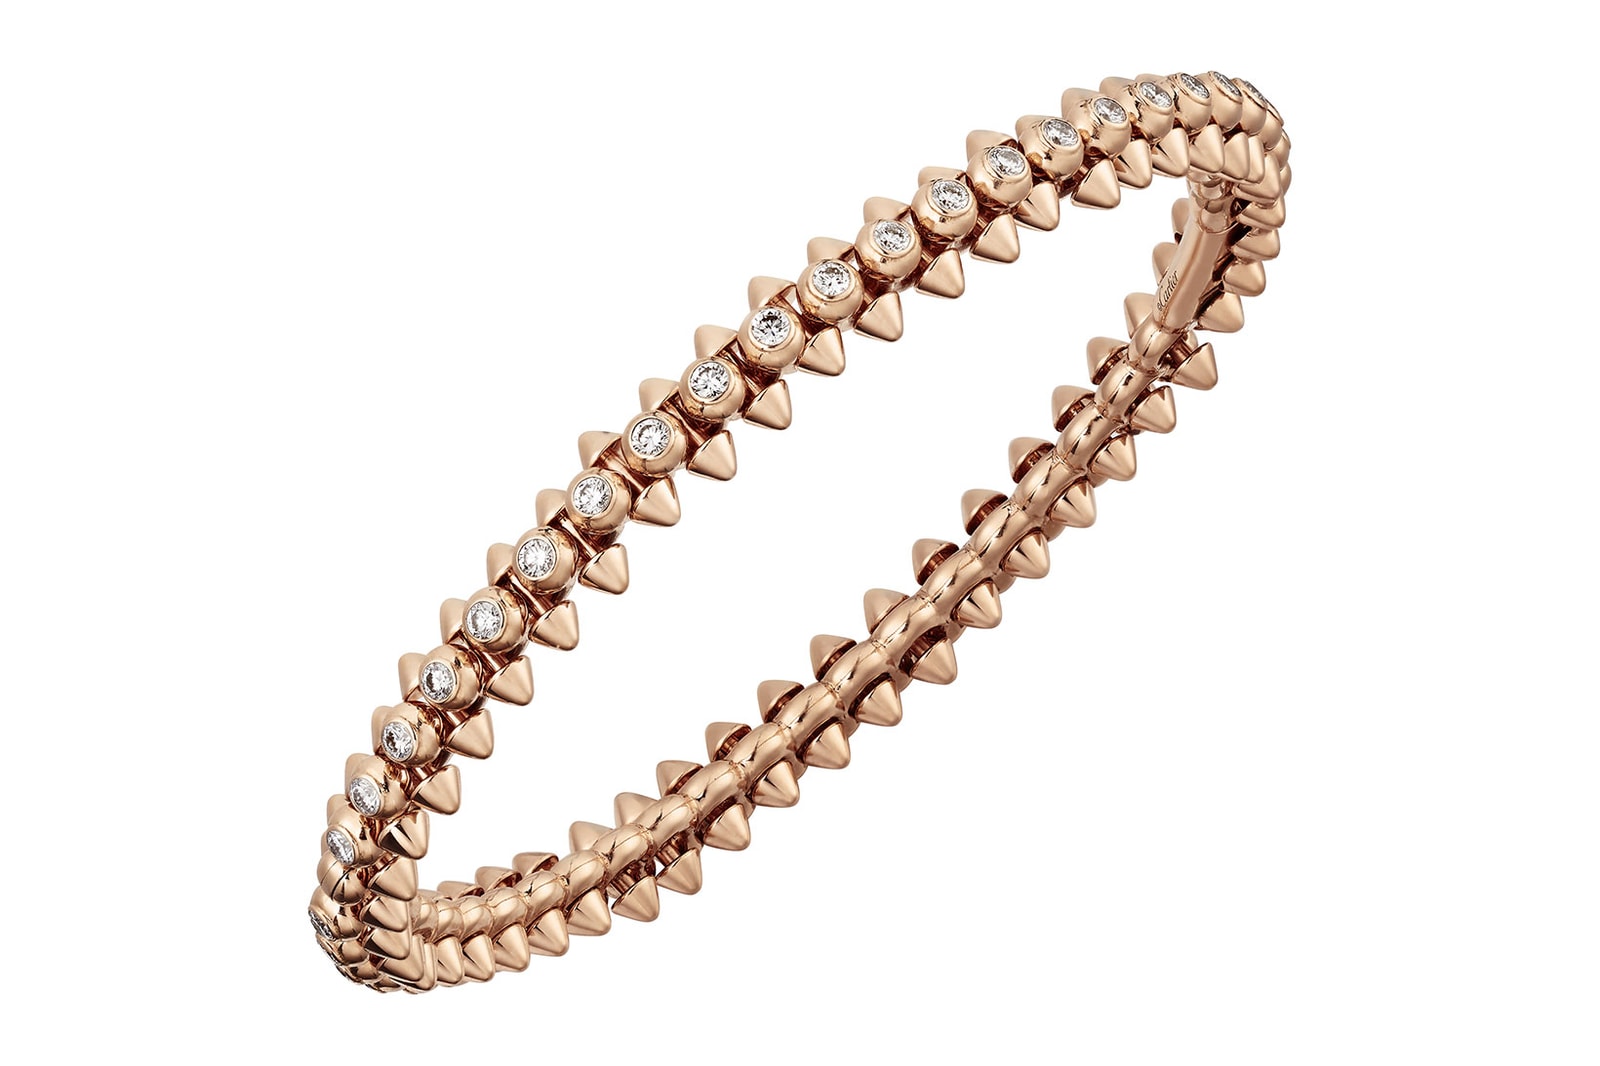 clash de cartier gold pink white gold diamonds jewelry launch kaya scodelario necklaces earrings bracelets